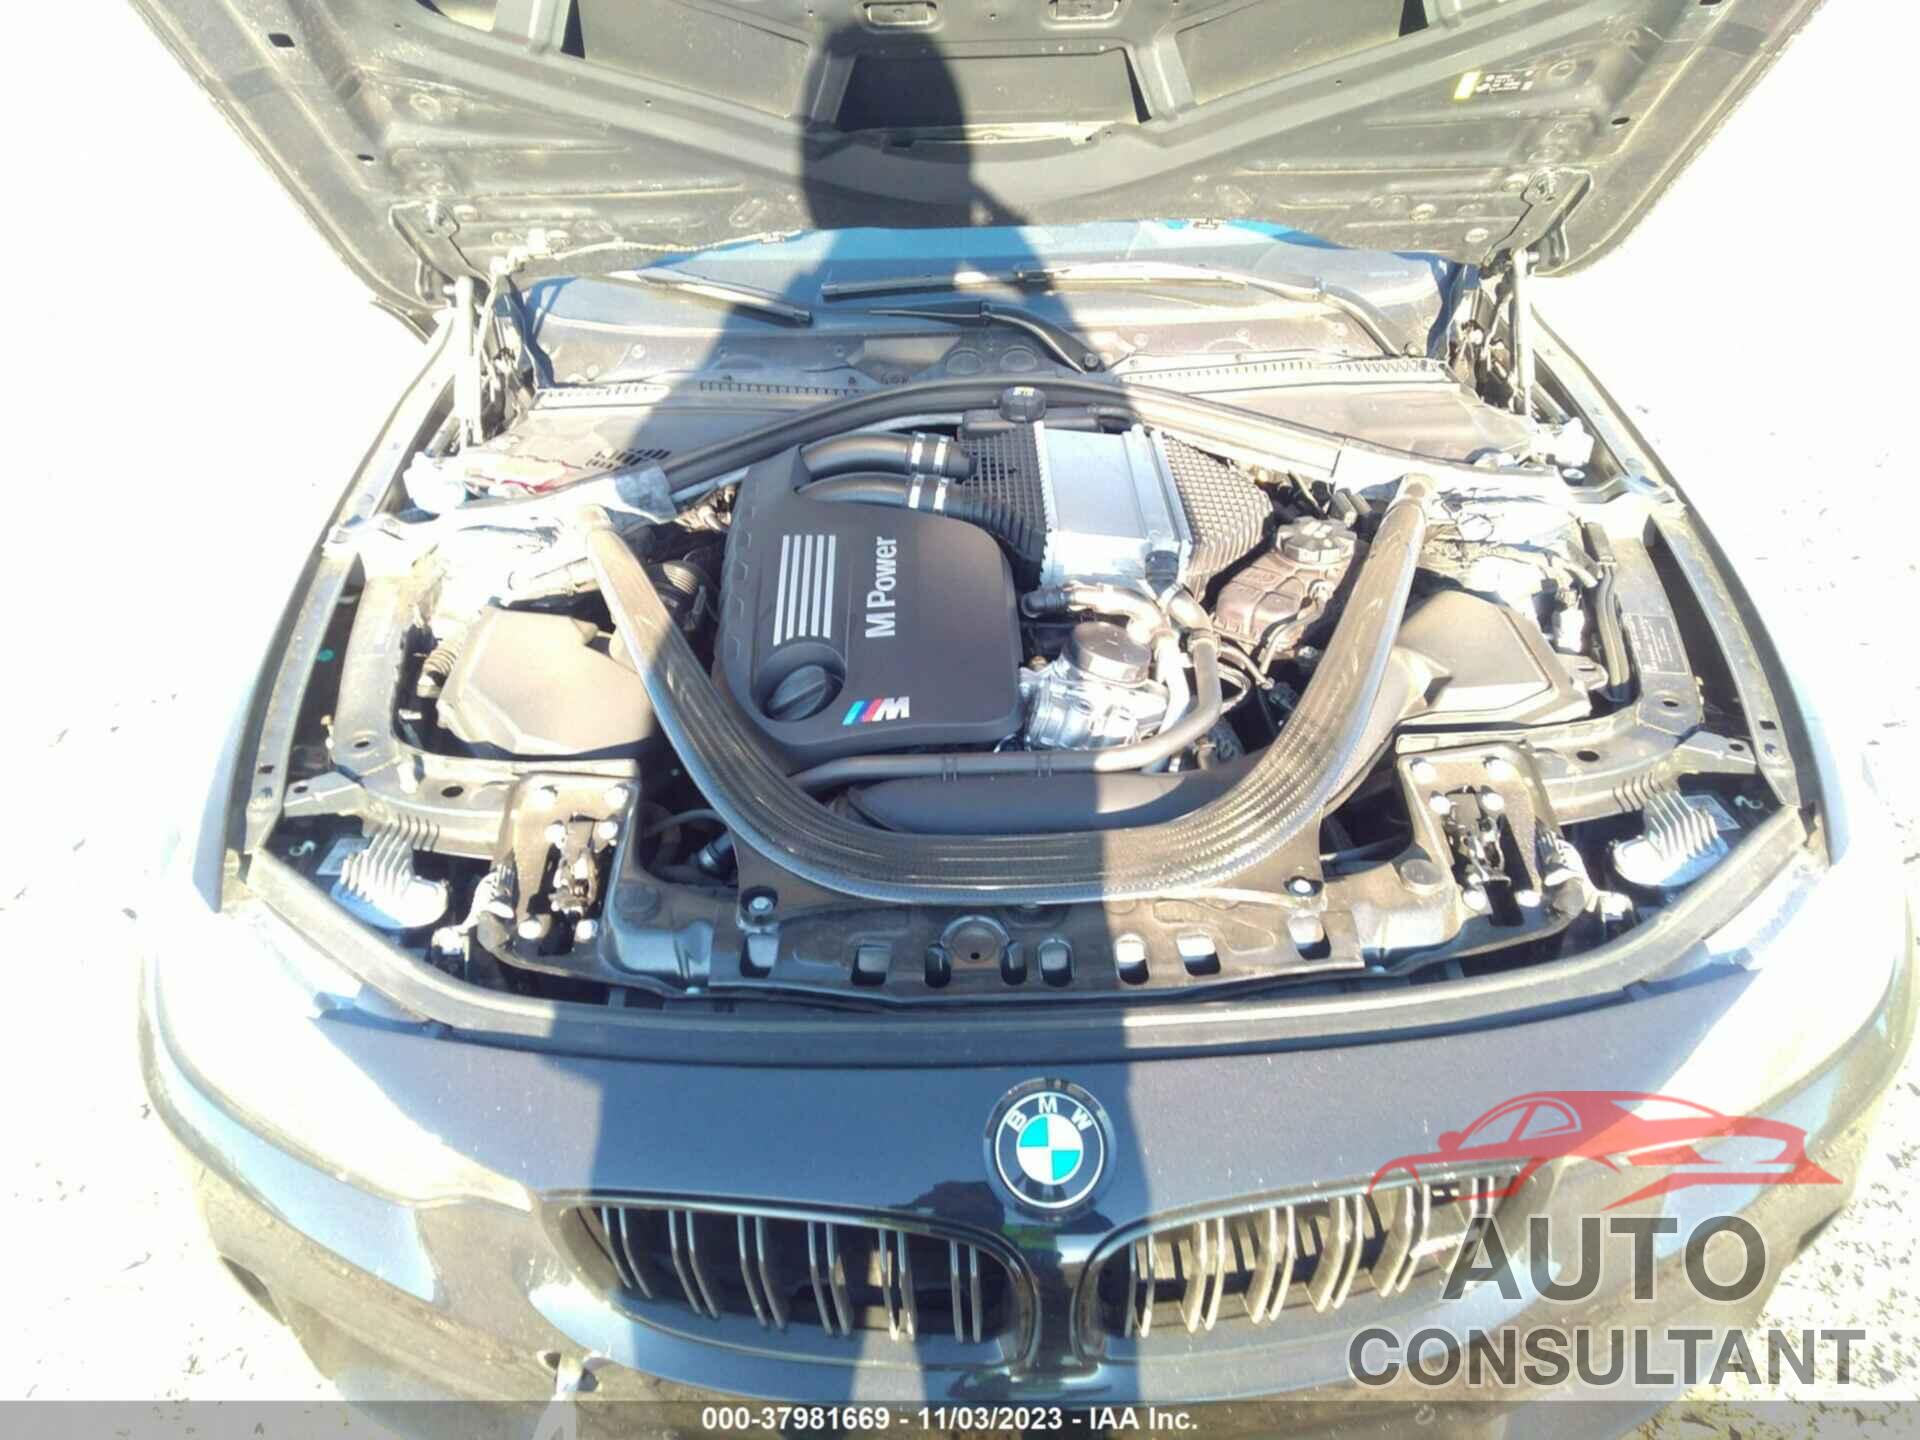 BMW M3 2018 - WBS8M9C58J5K99740